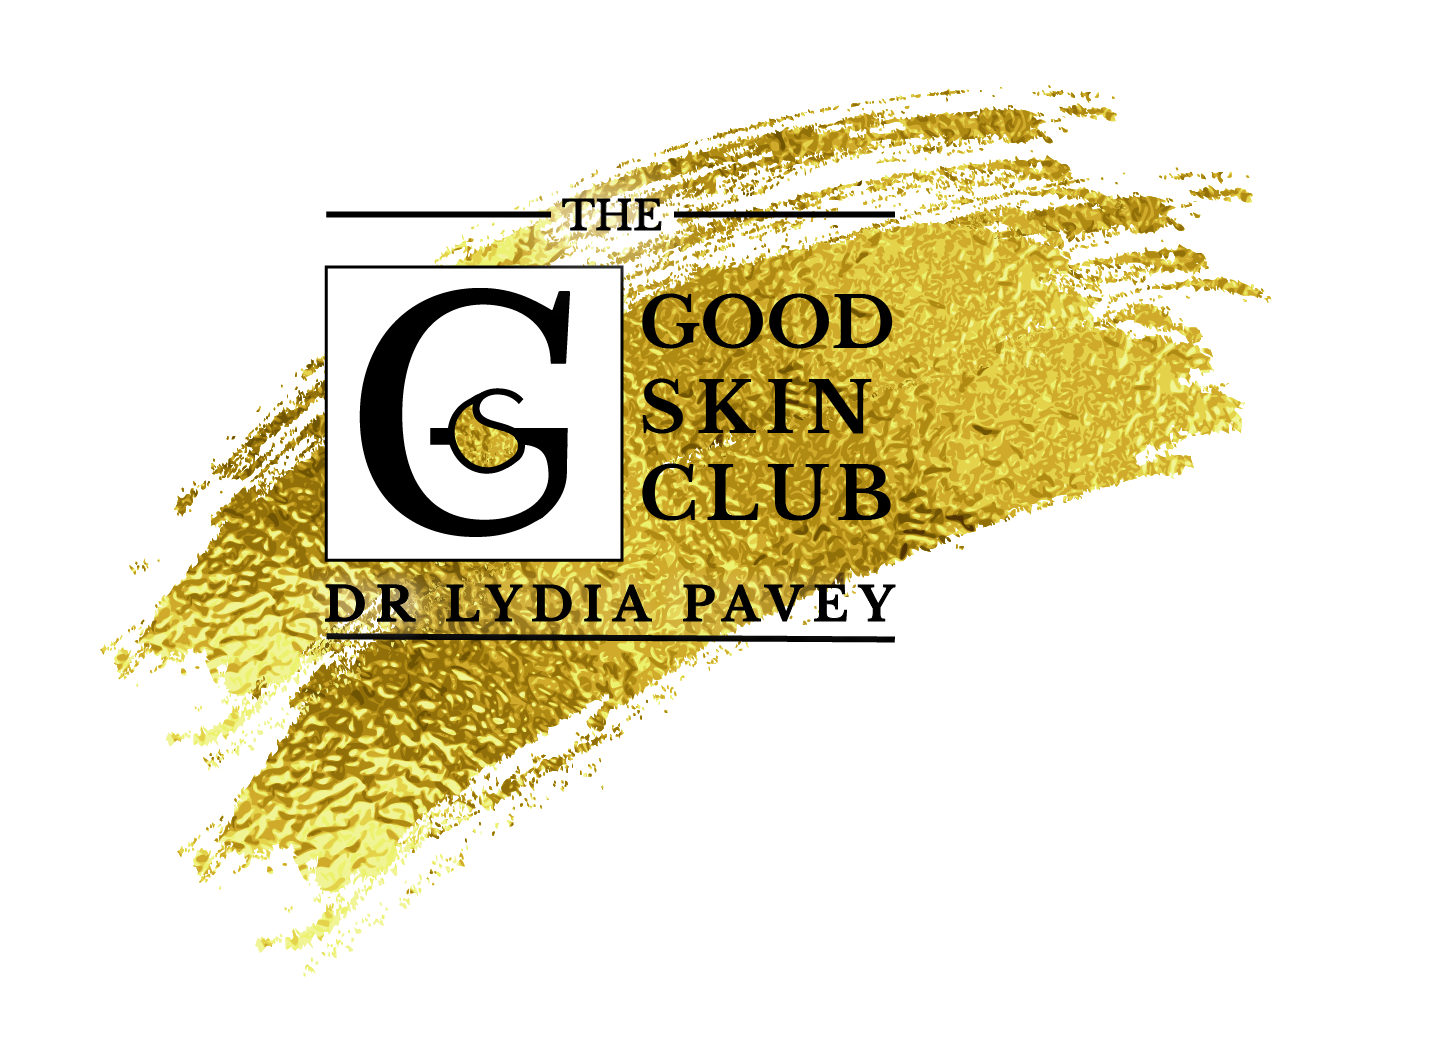 The good skin club logo